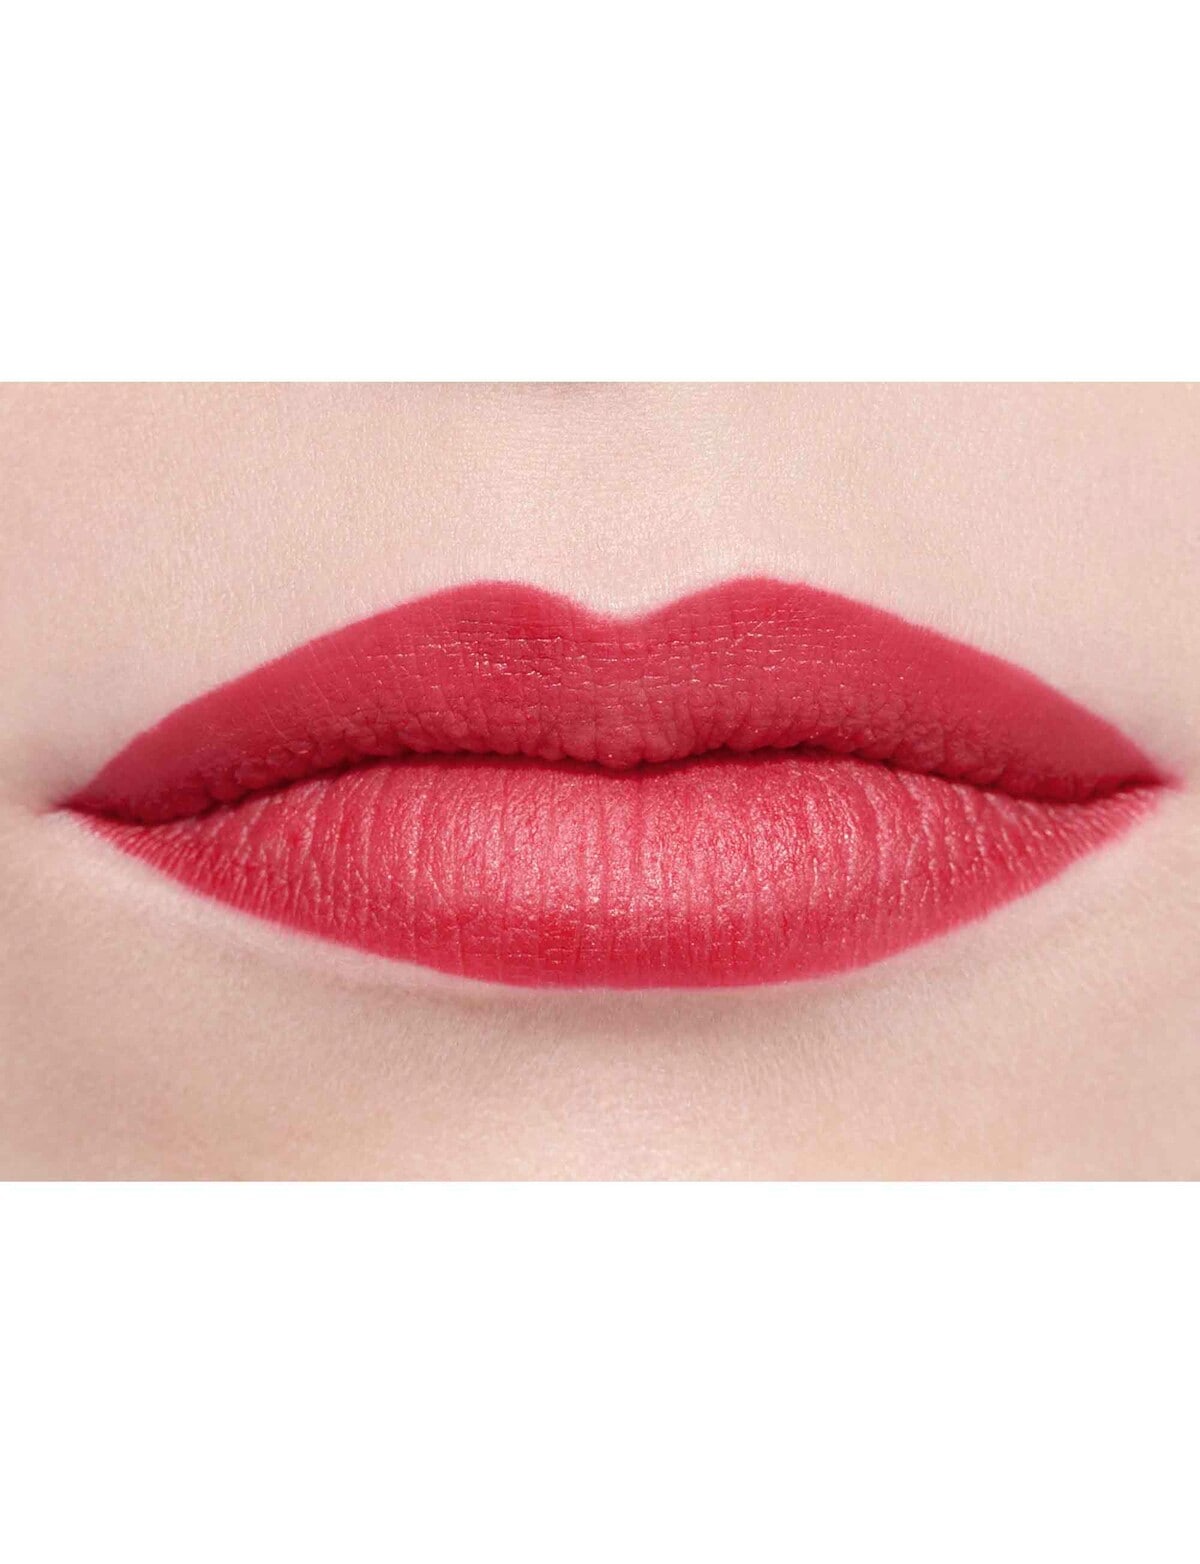 Chanel Rouge Allure Luminous Intense Lip Colour - 209 (Alter Ego)